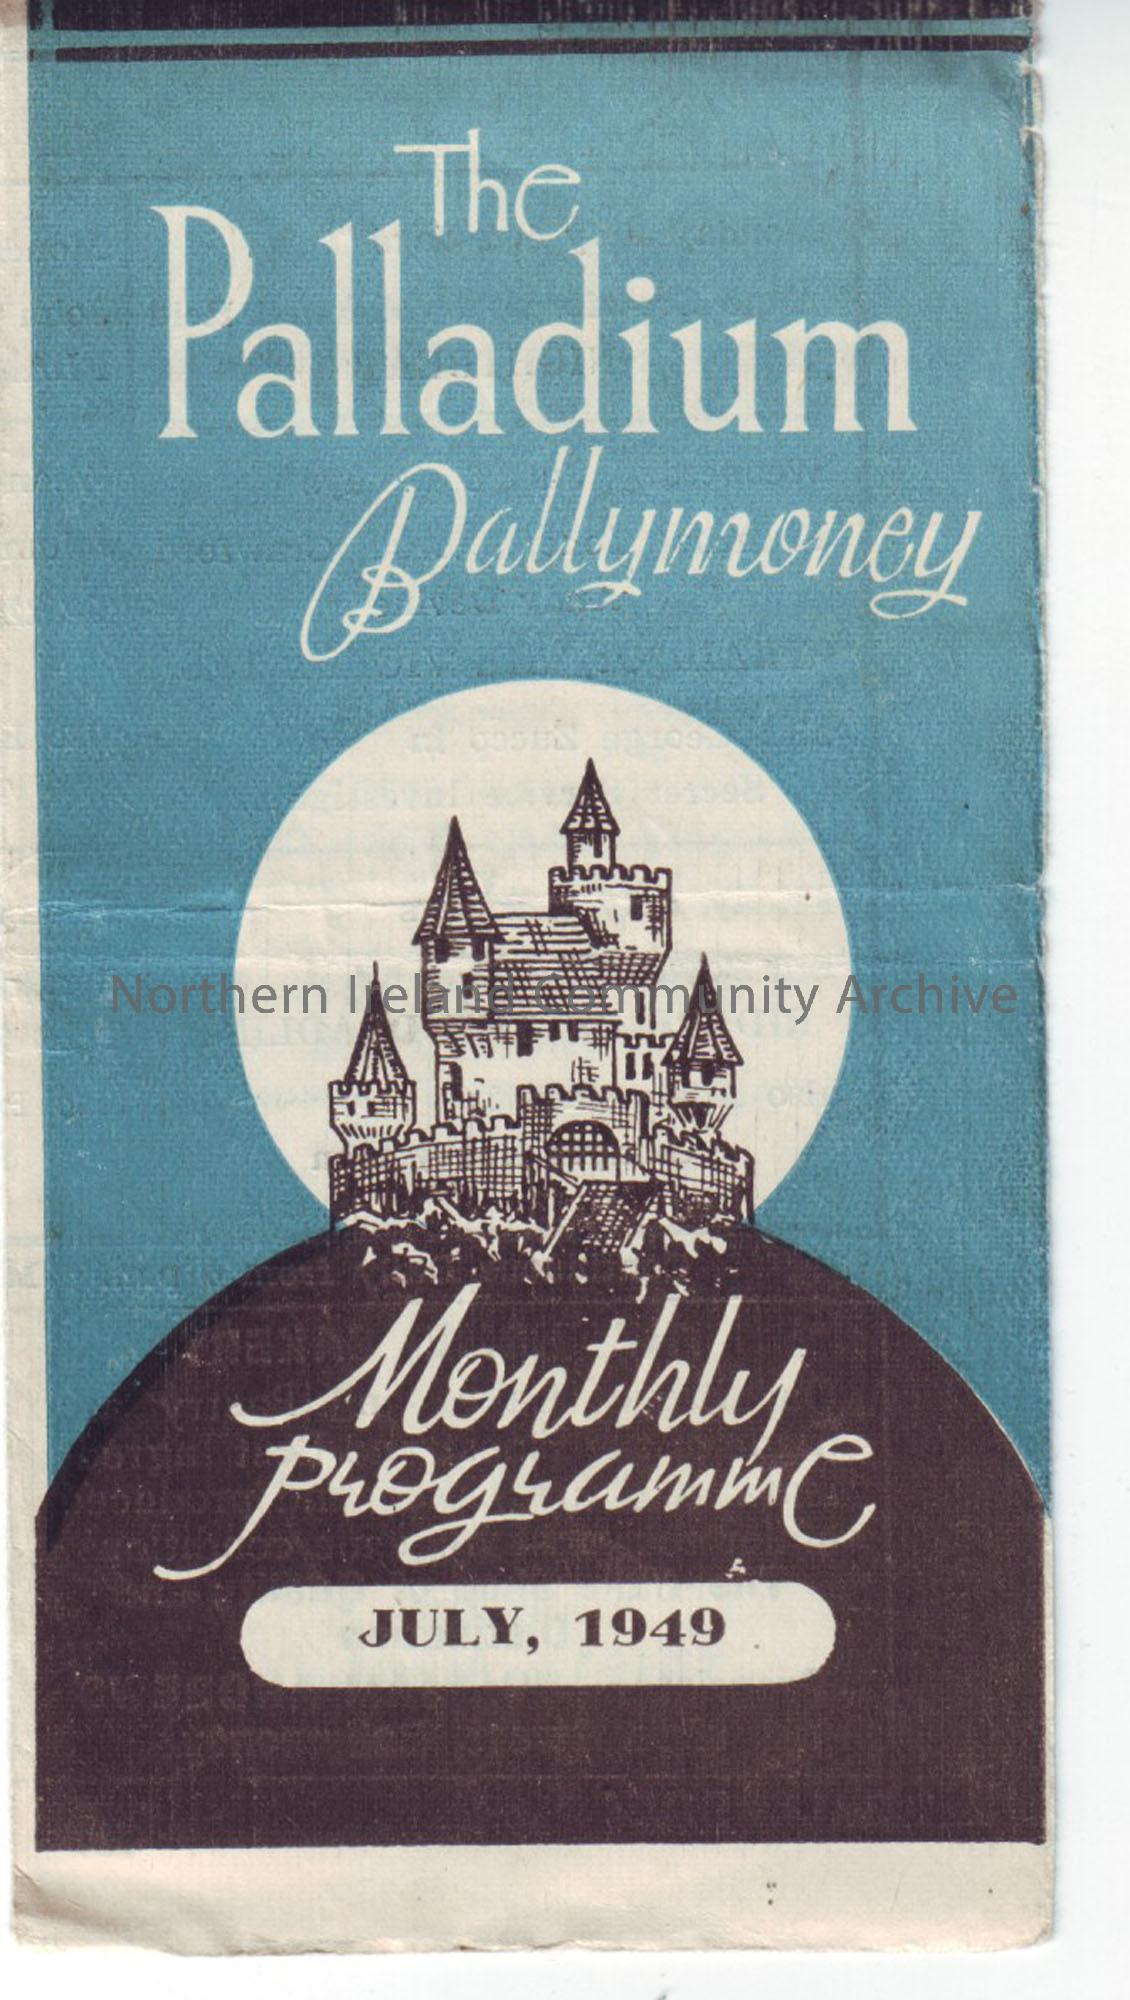 blue monthly programme for Ballymoney Palladium cinema- July 1949